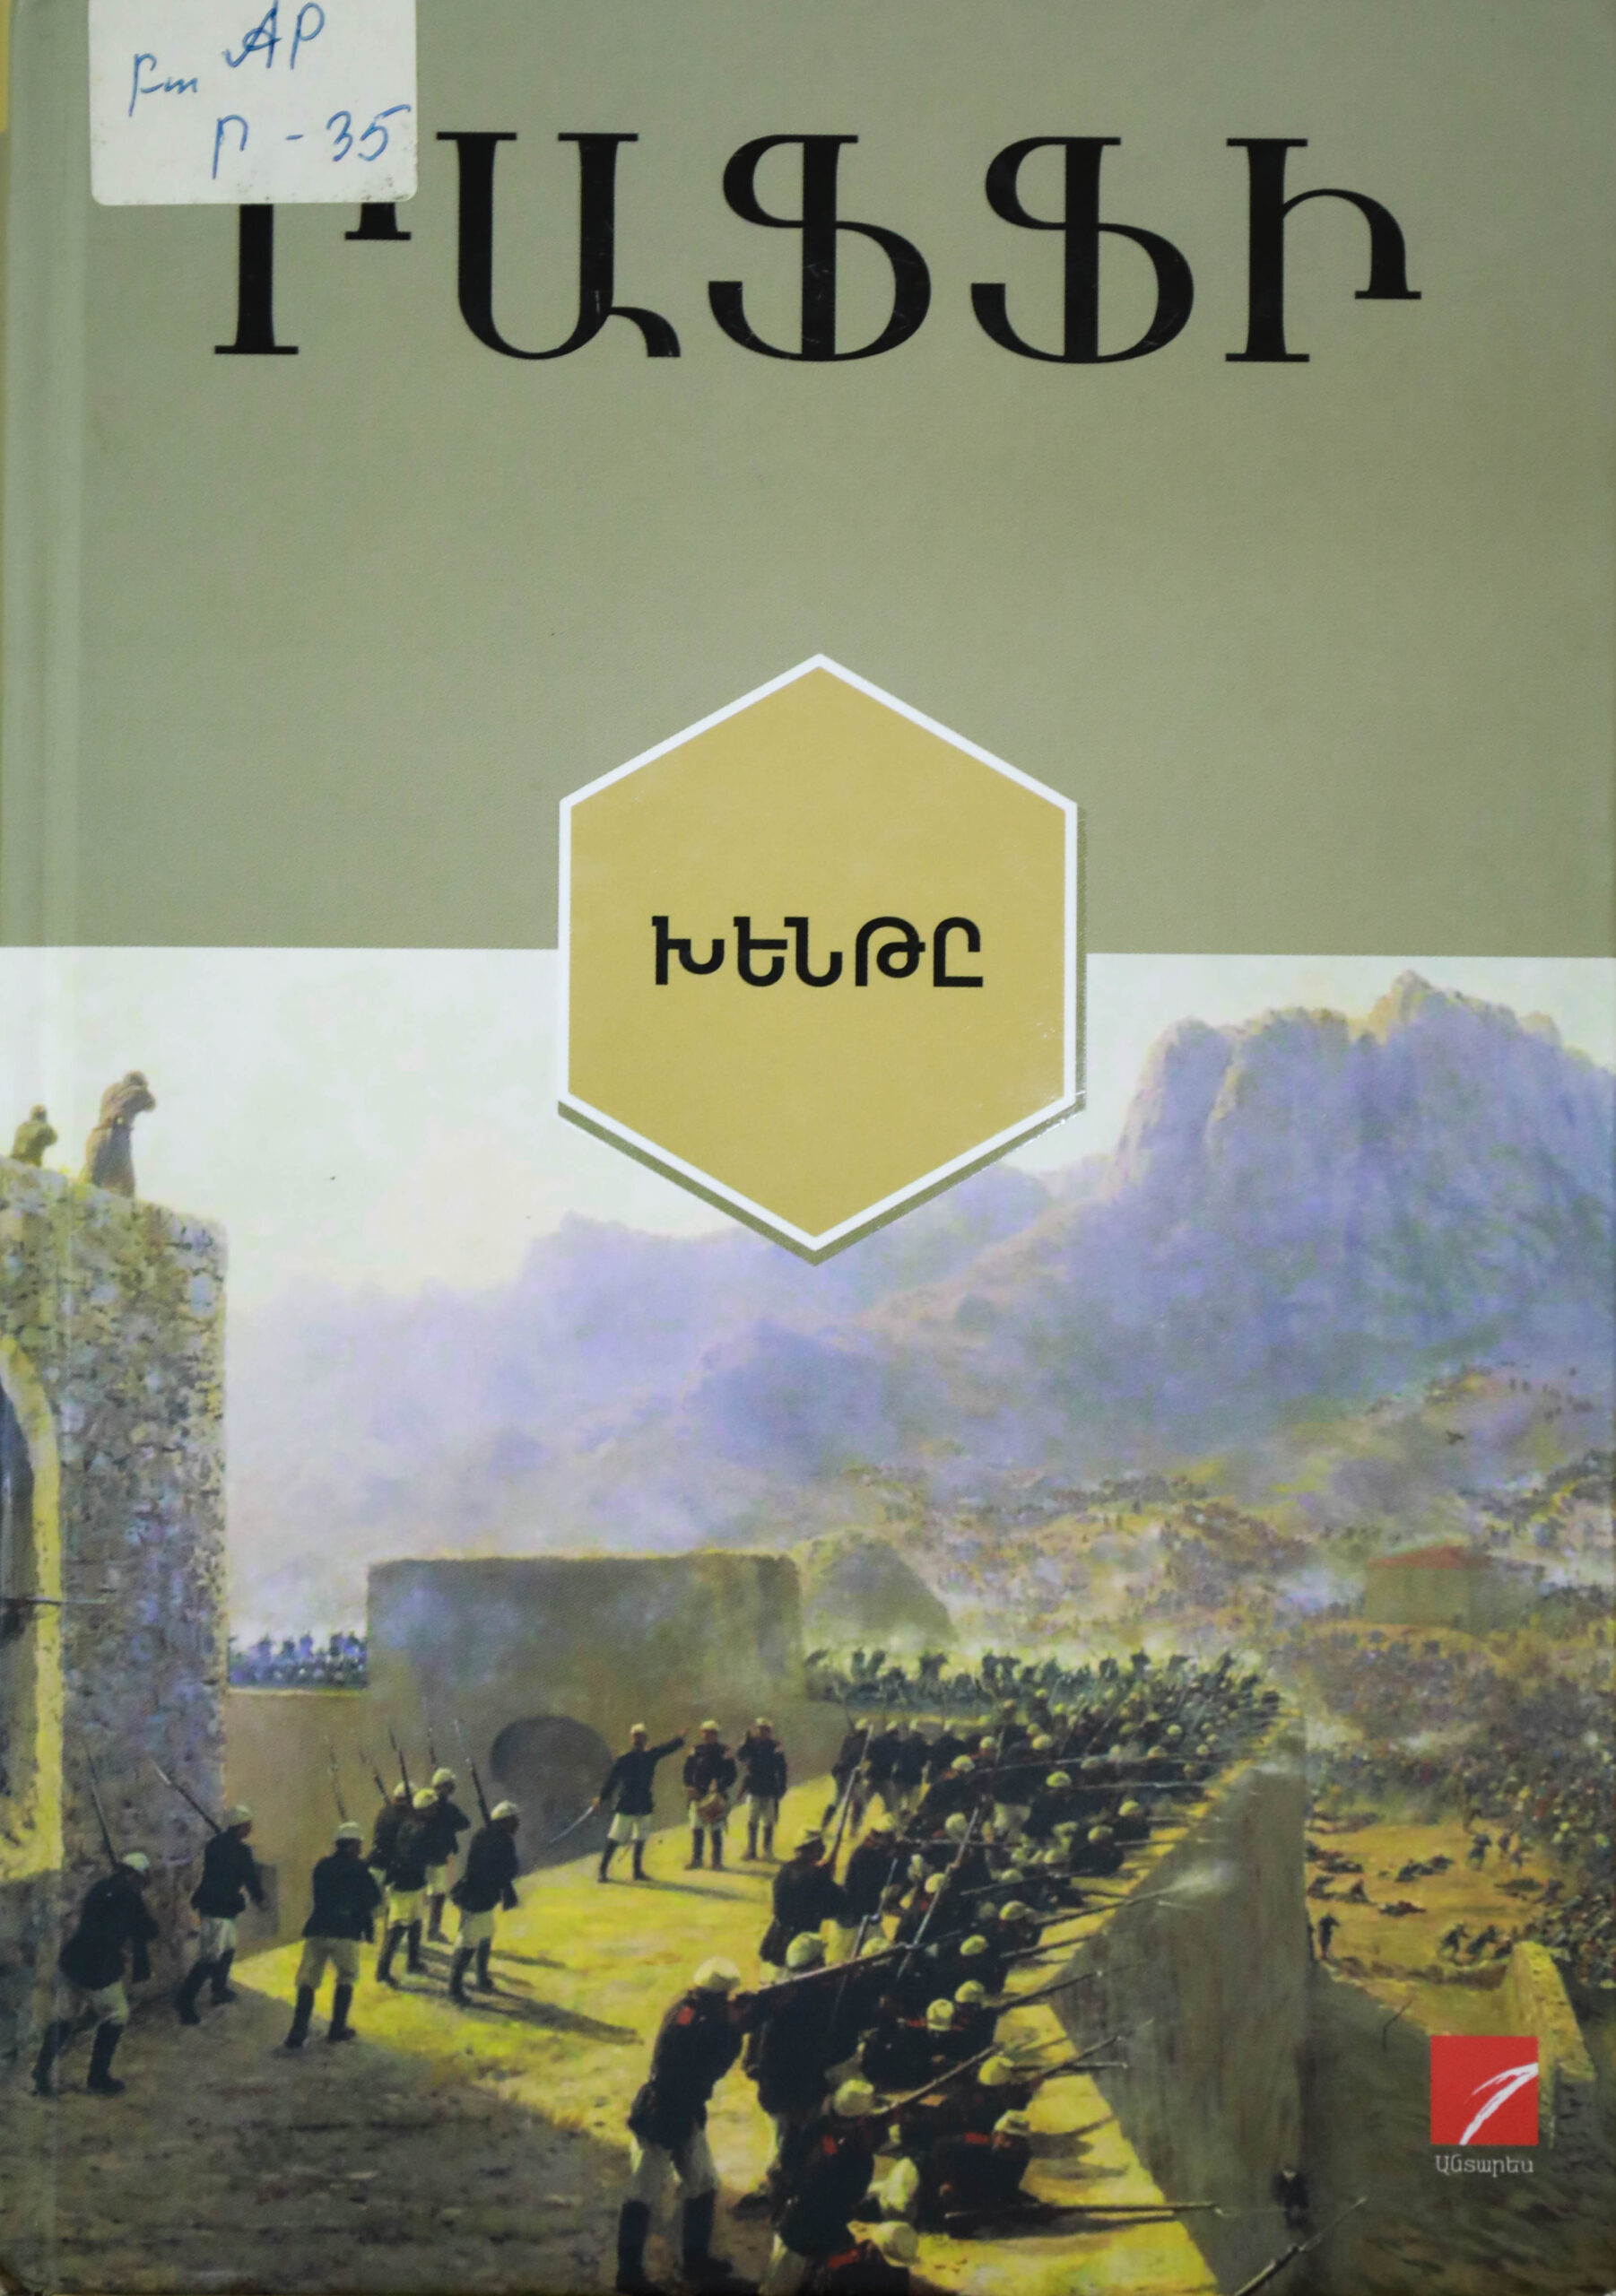 book title